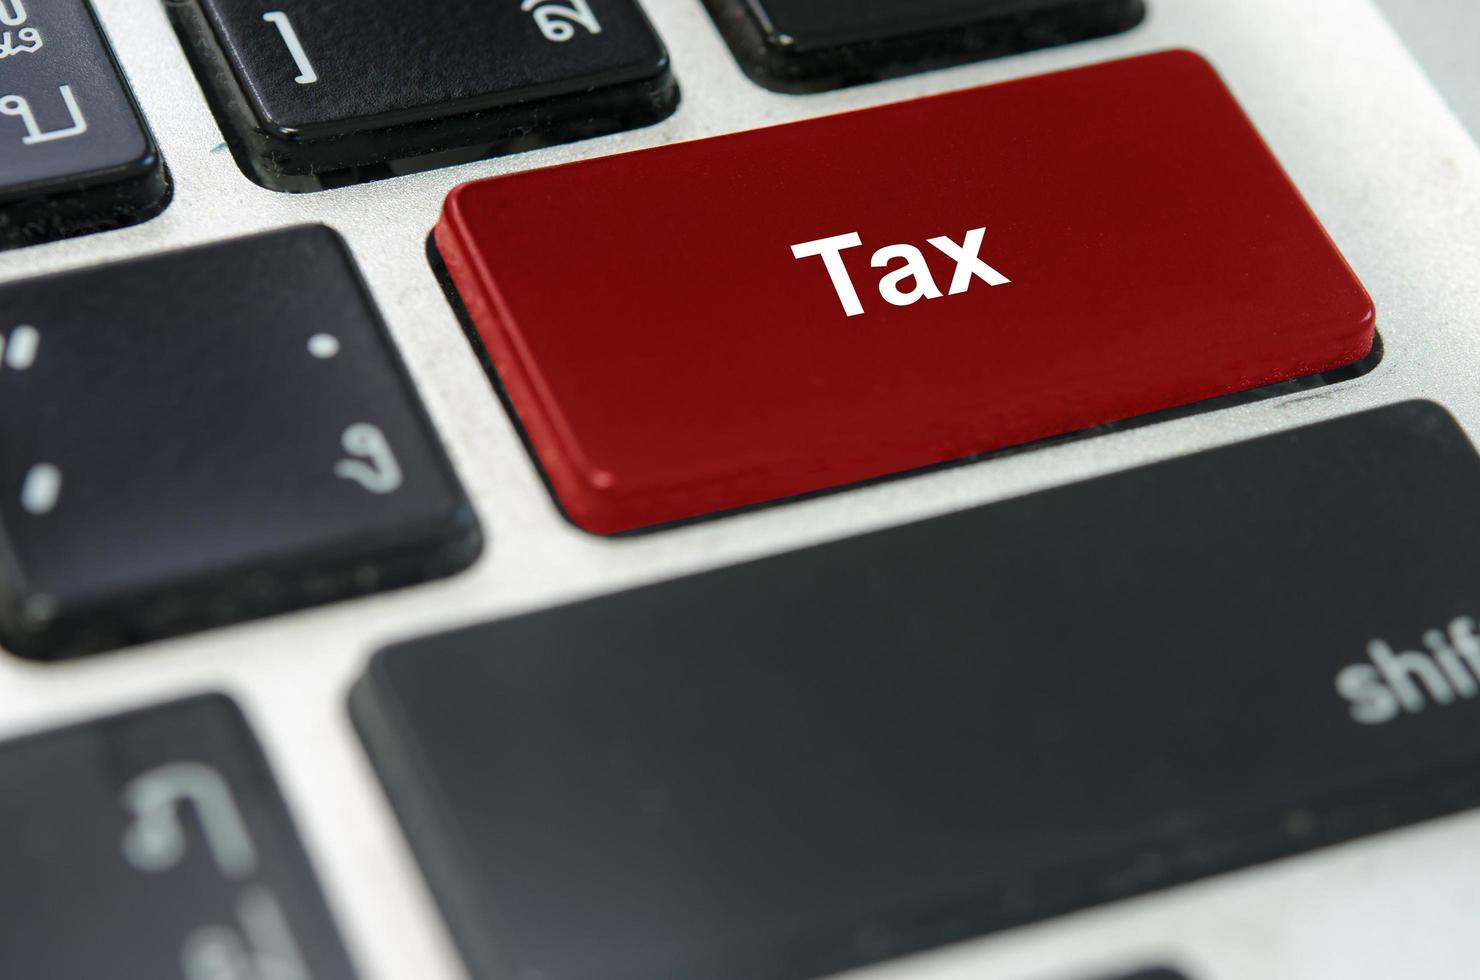 Tax button on a keyboard photo